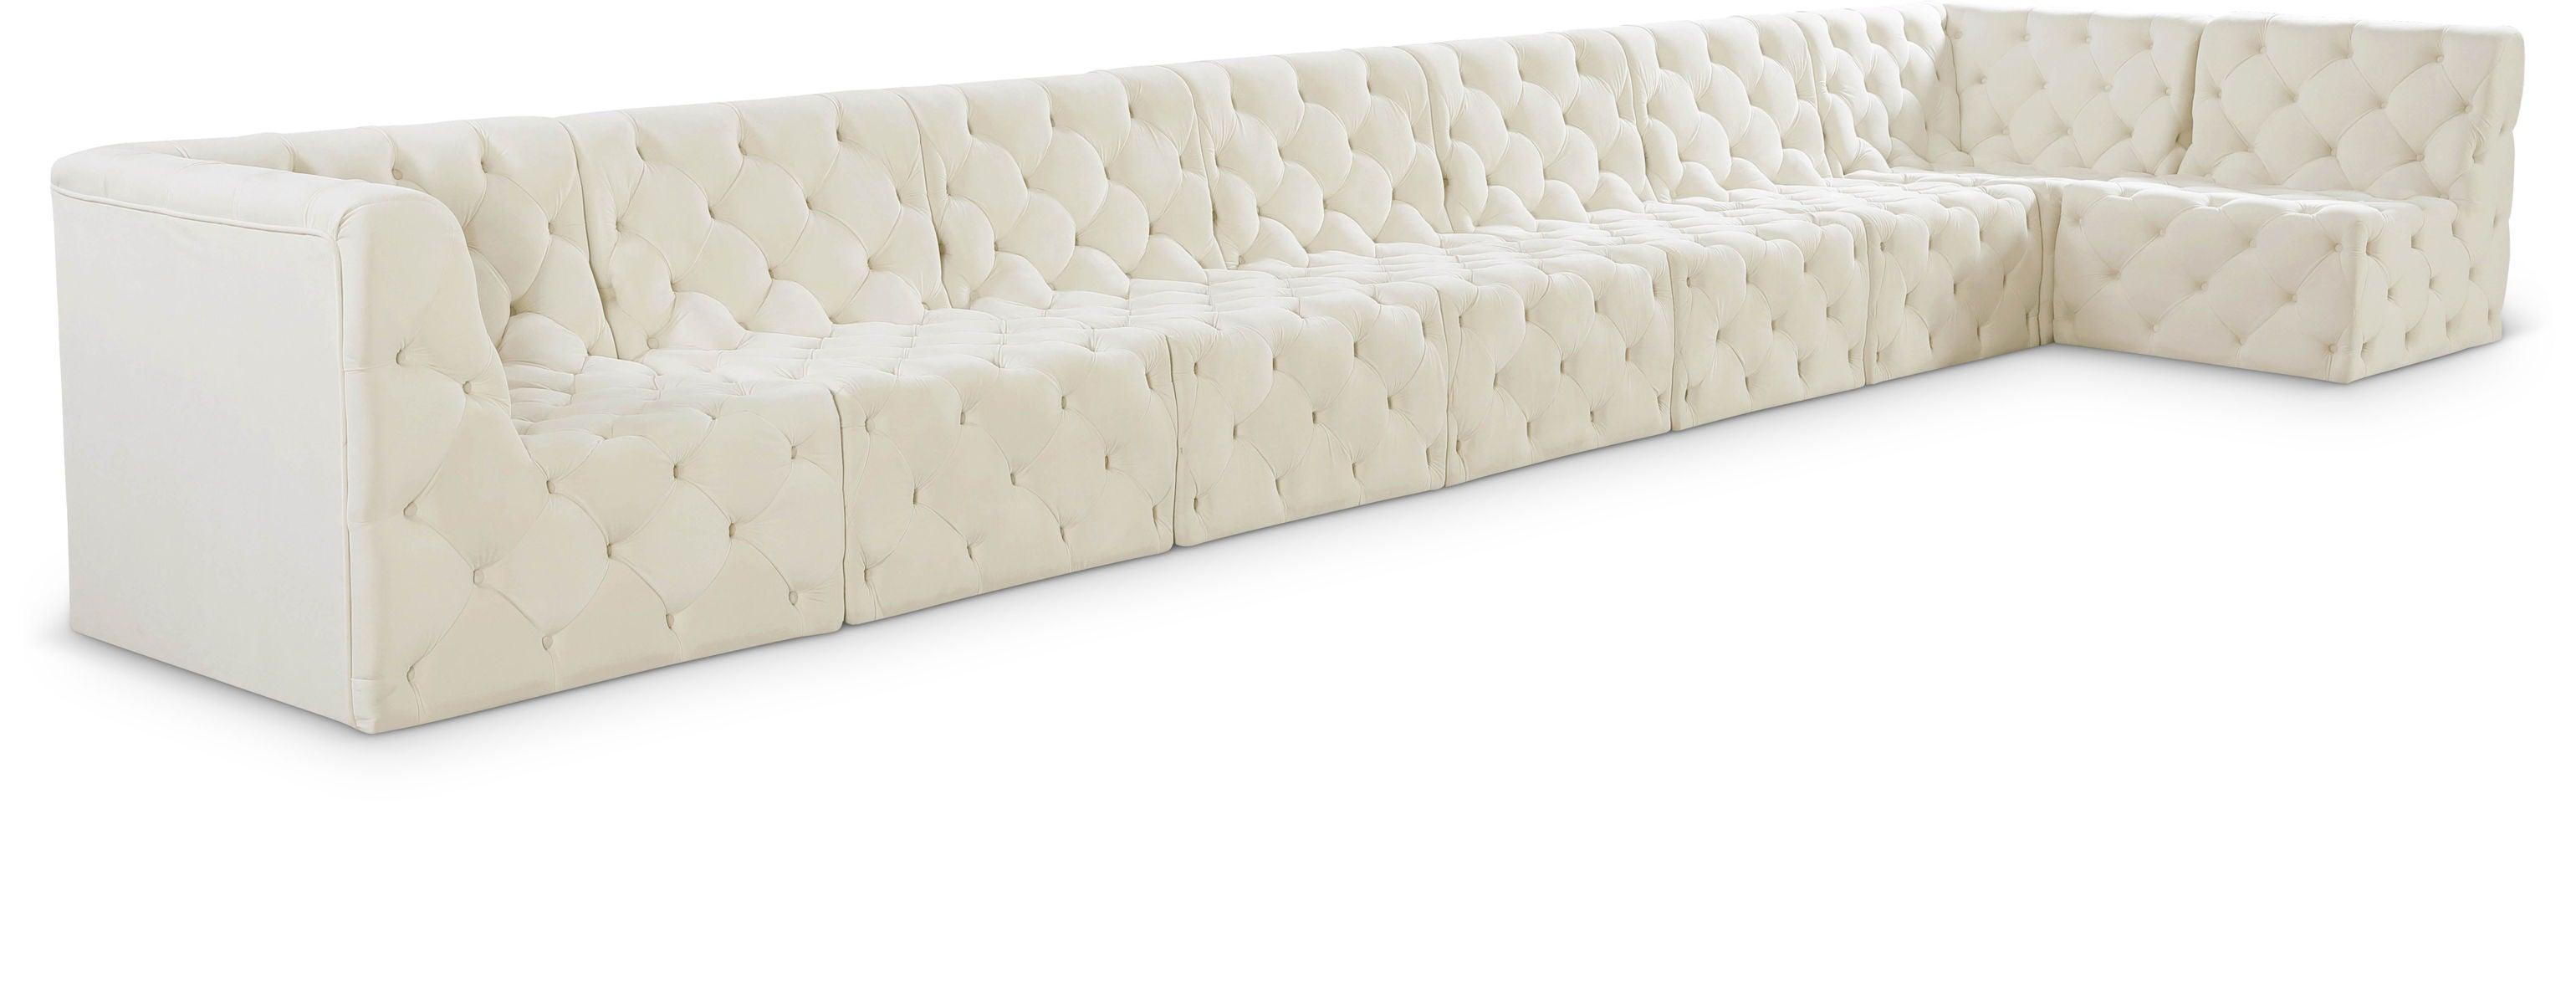 Meridian Furniture - Tuft - Modular Sectional 8 Piece - Cream - 5th Avenue Furniture